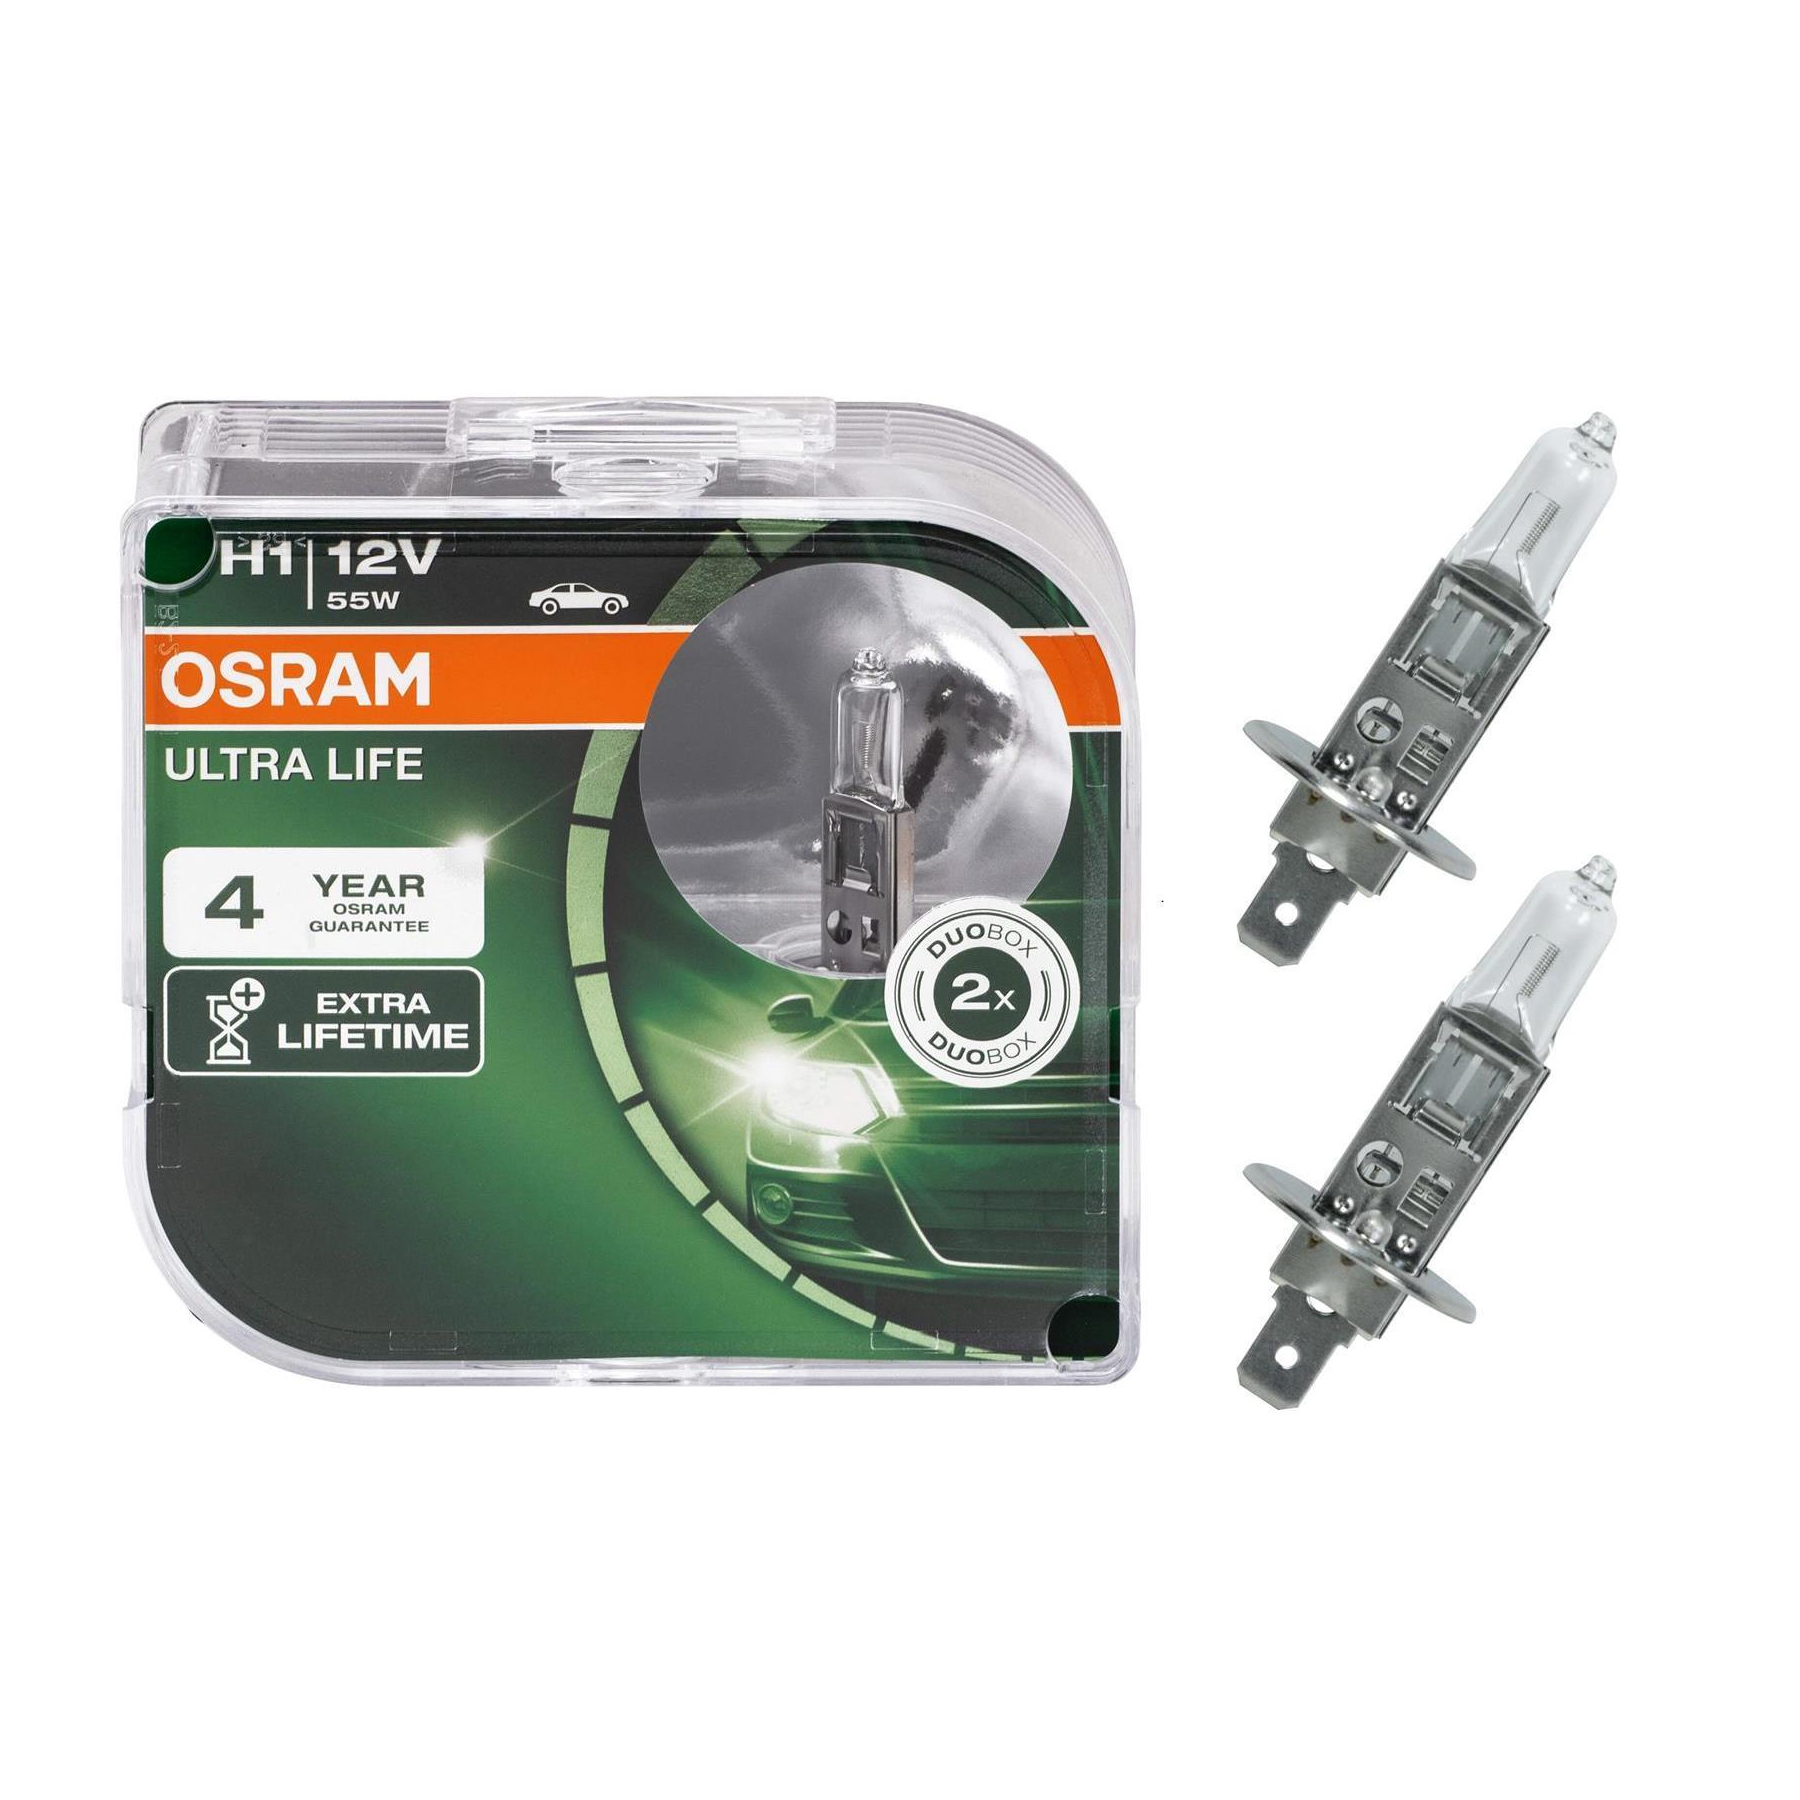 Osram Ultra Life H11 Duobox 